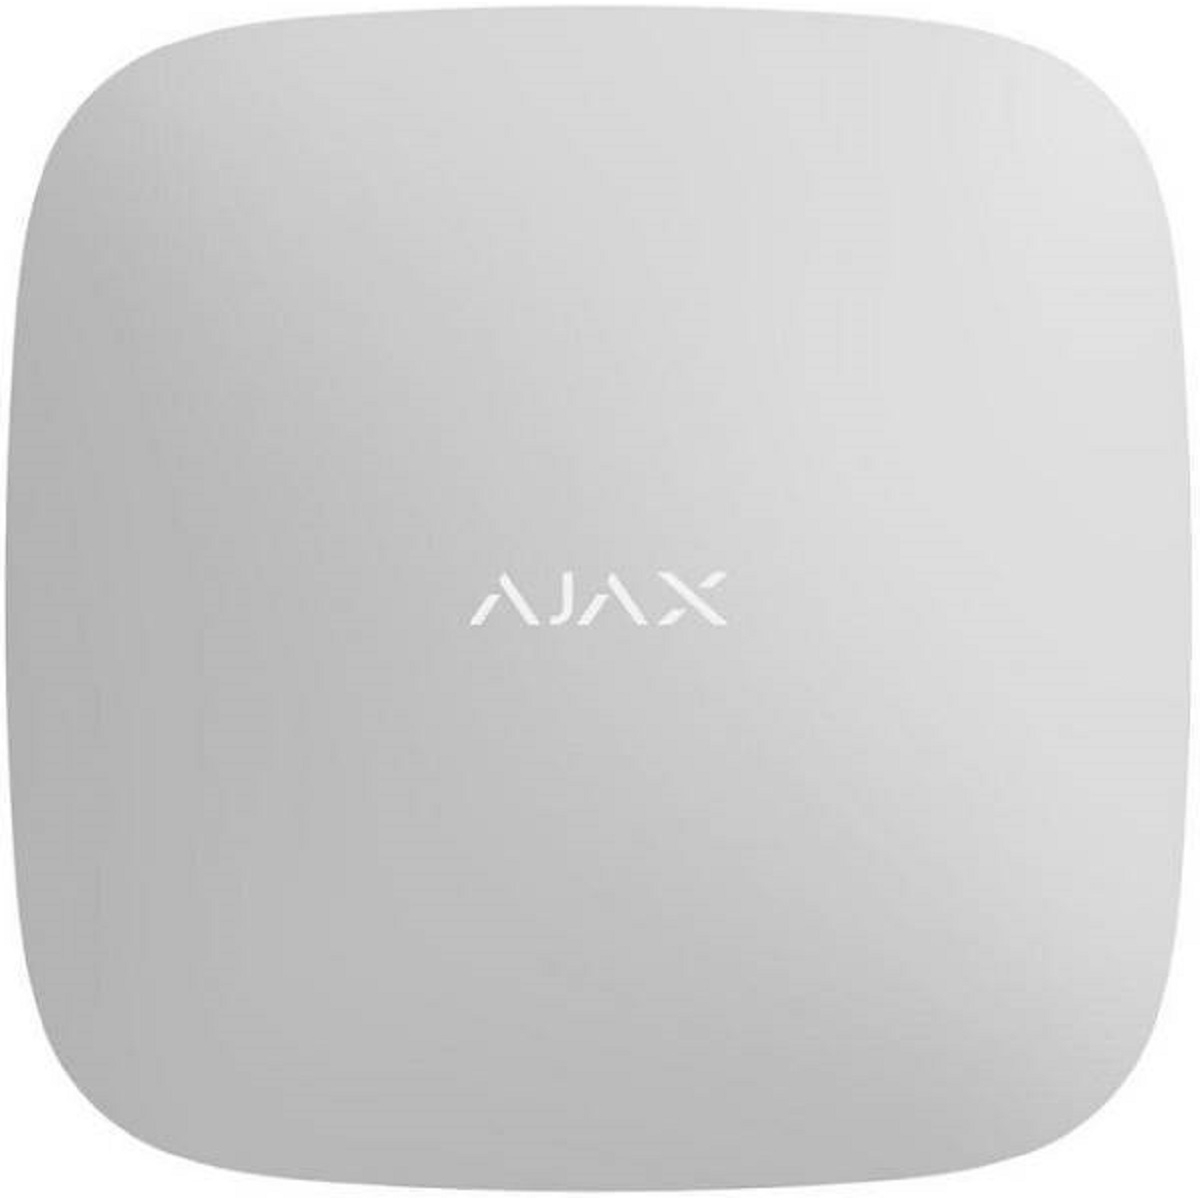 Ajax Hub Plus Κεντρικός Πίνακας WiFi-Ethernet-Dual Sim (Λευκό)